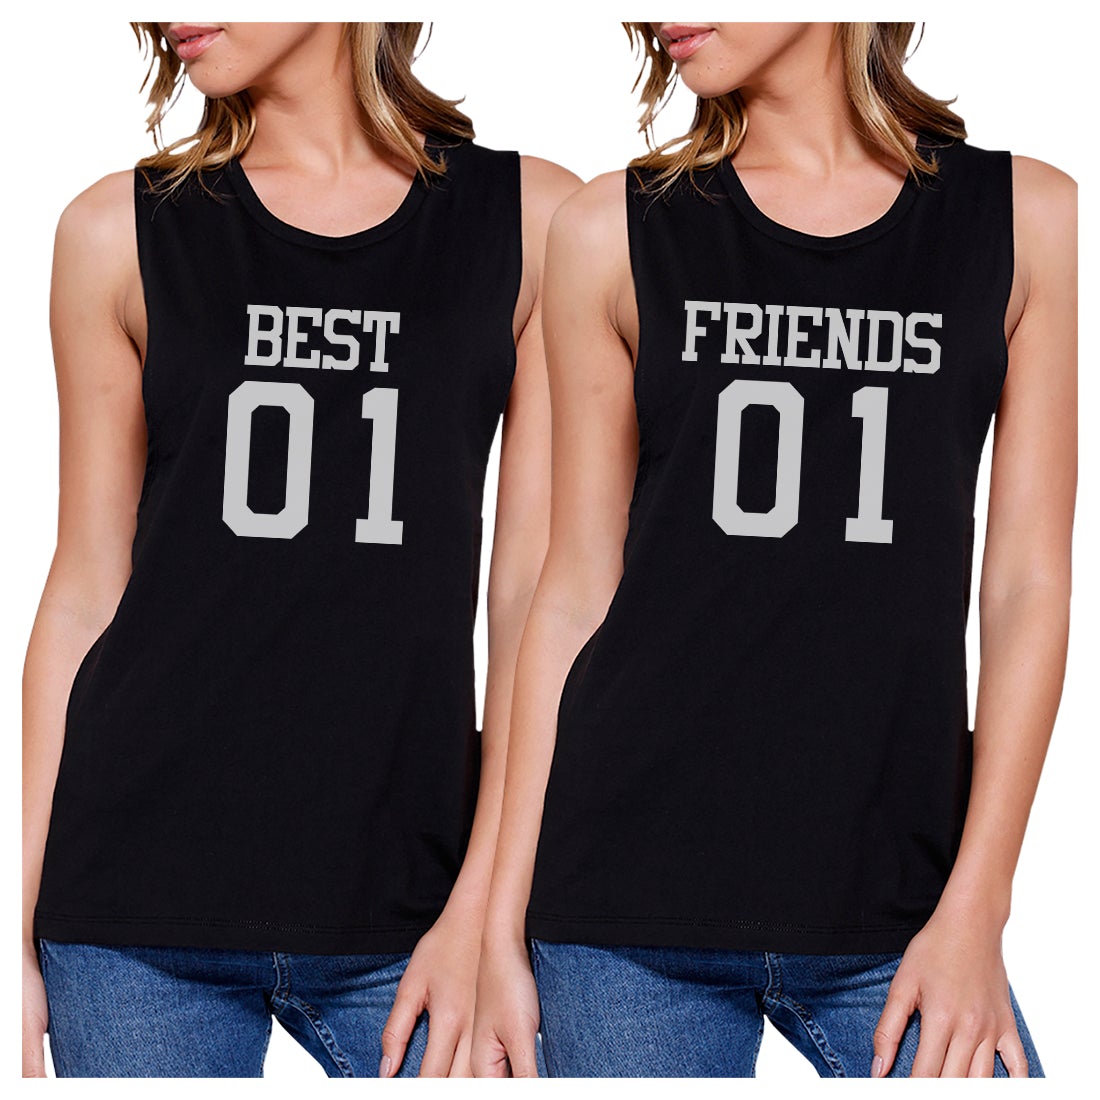 Best01 Friends01 BFF Matching Muscle Shirts Womens Tank Black